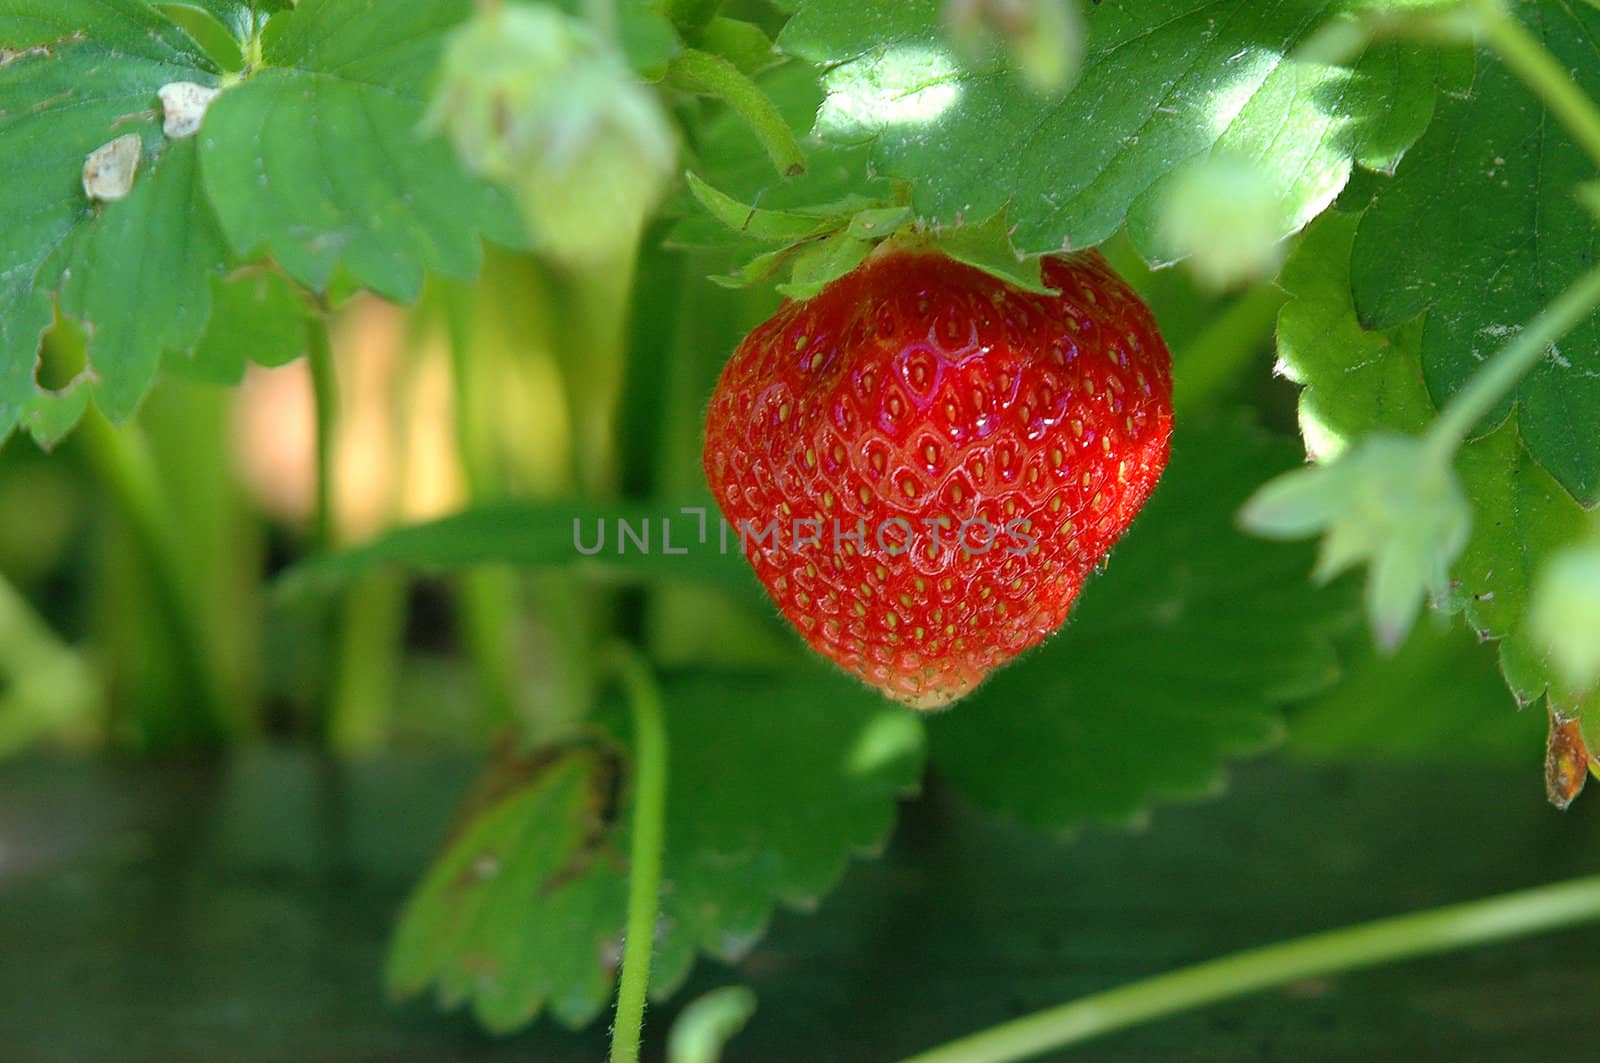 Tasty strawberries from the garden